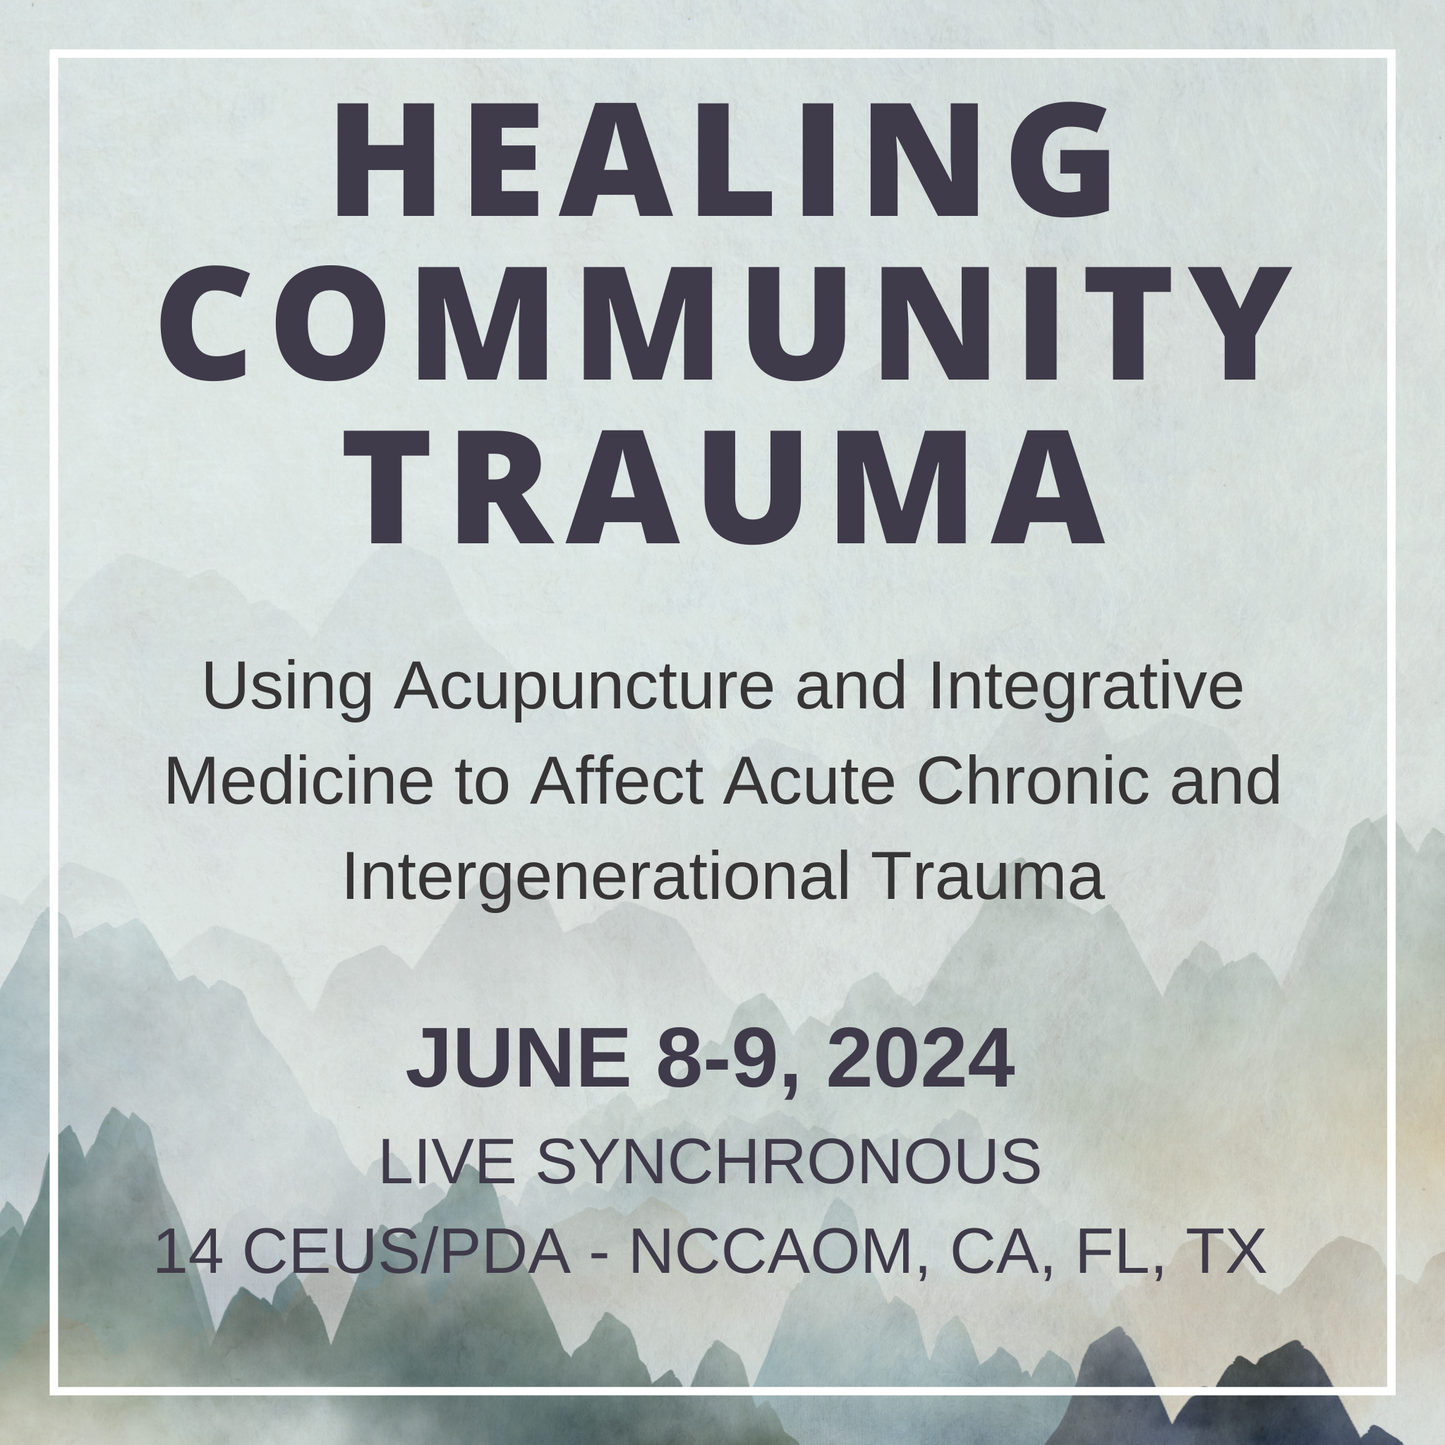 Healing Community Trauma | June 8-9, 2024 | Live Synchronous